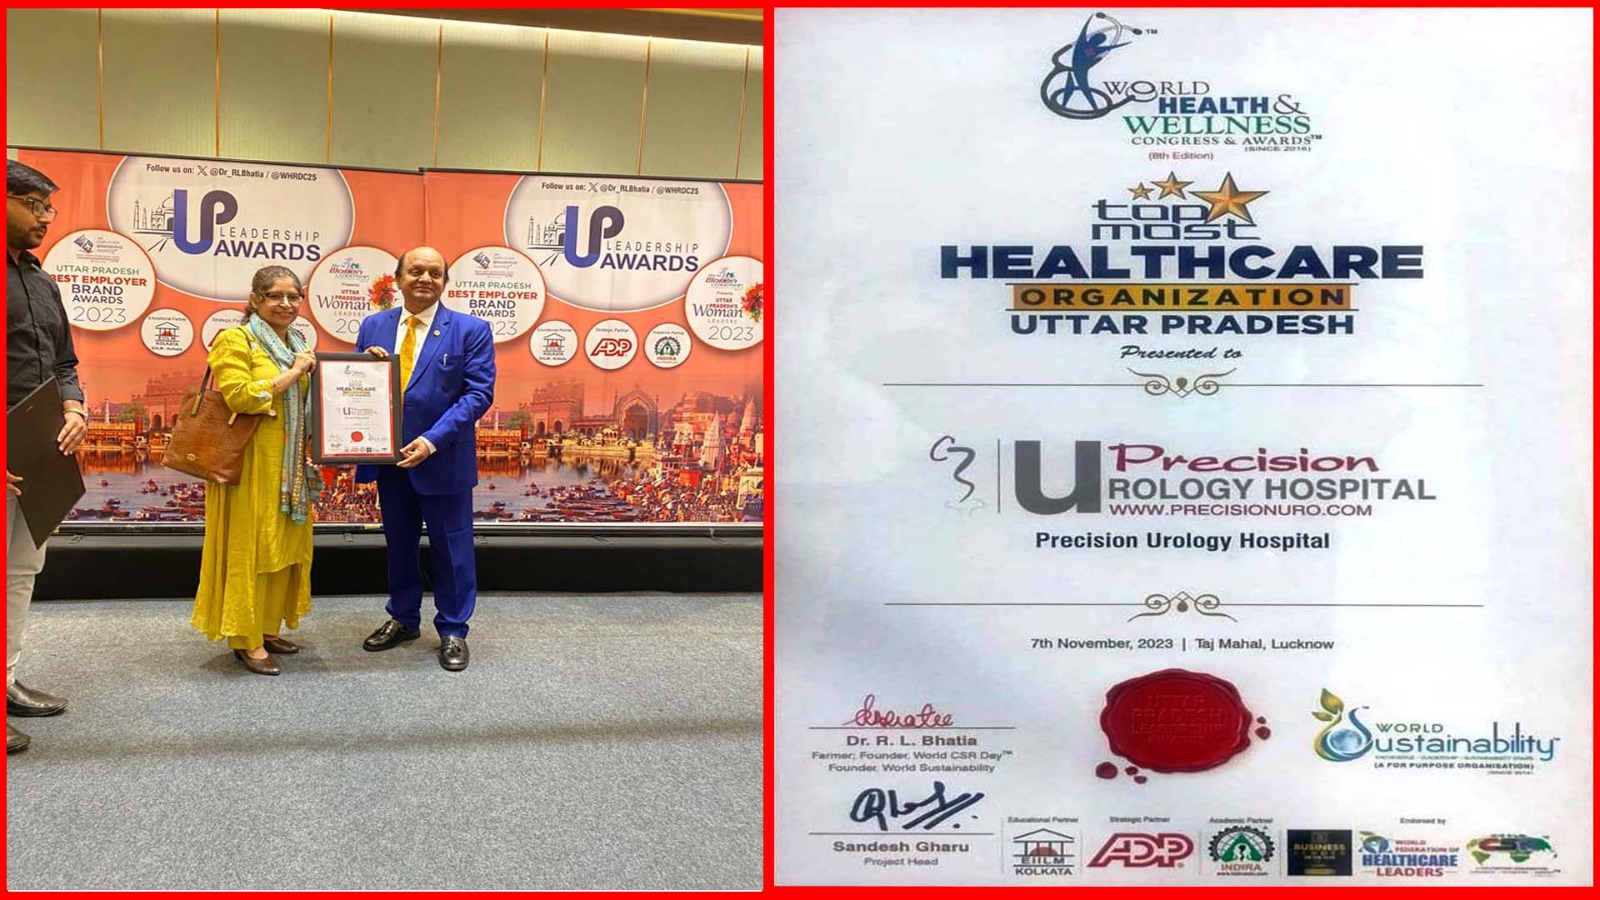 PUH awarded Topmost Healthcare Organization in Uttar Pradesh